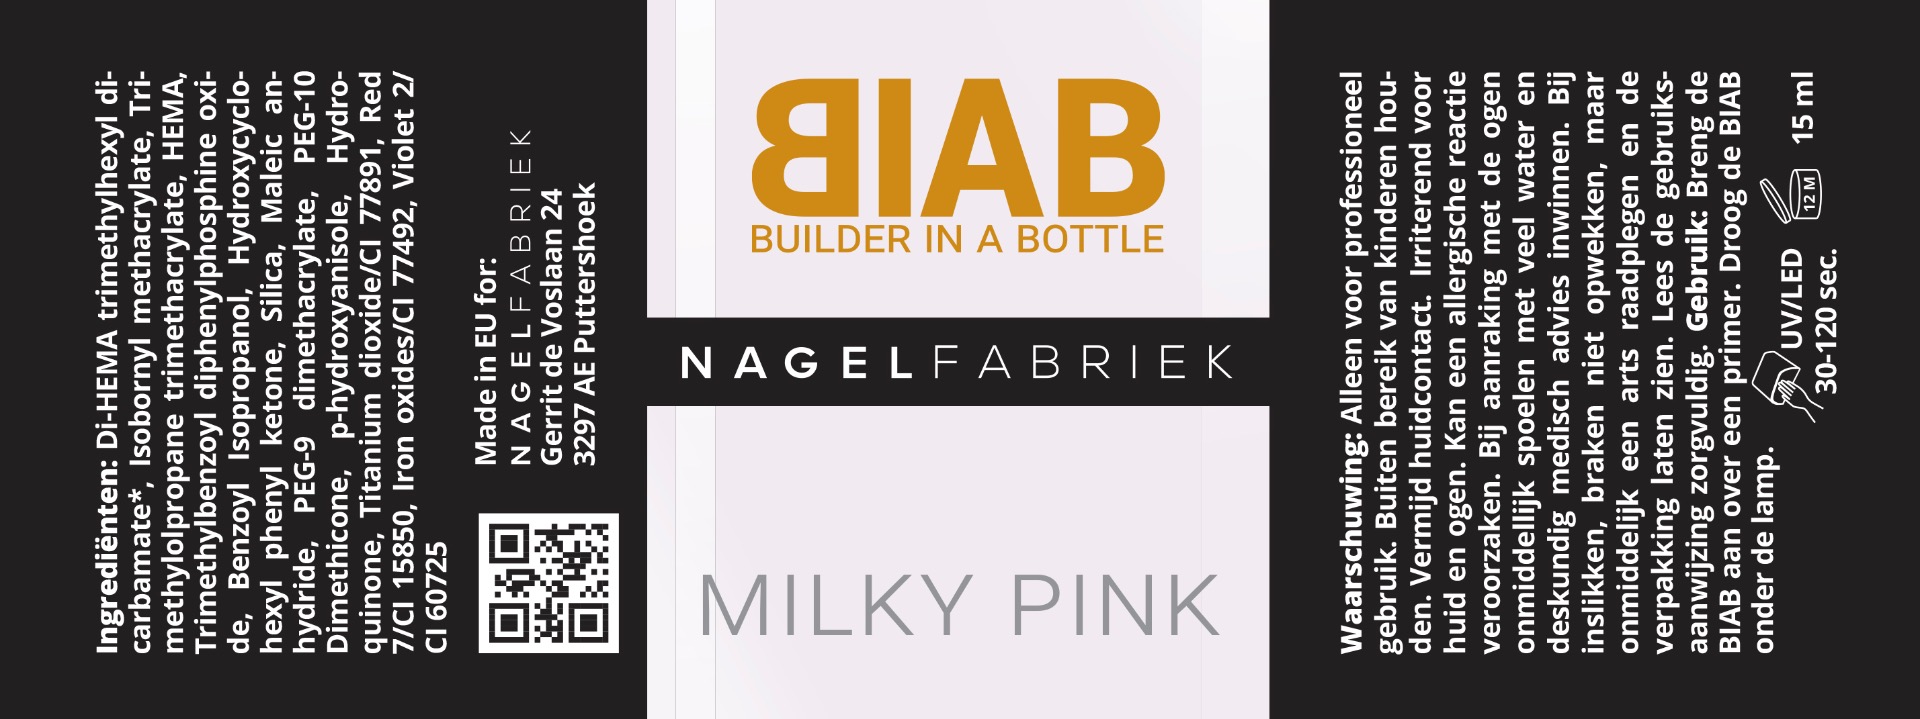 Label Builder In a Bottle Milky Pink - BIAB